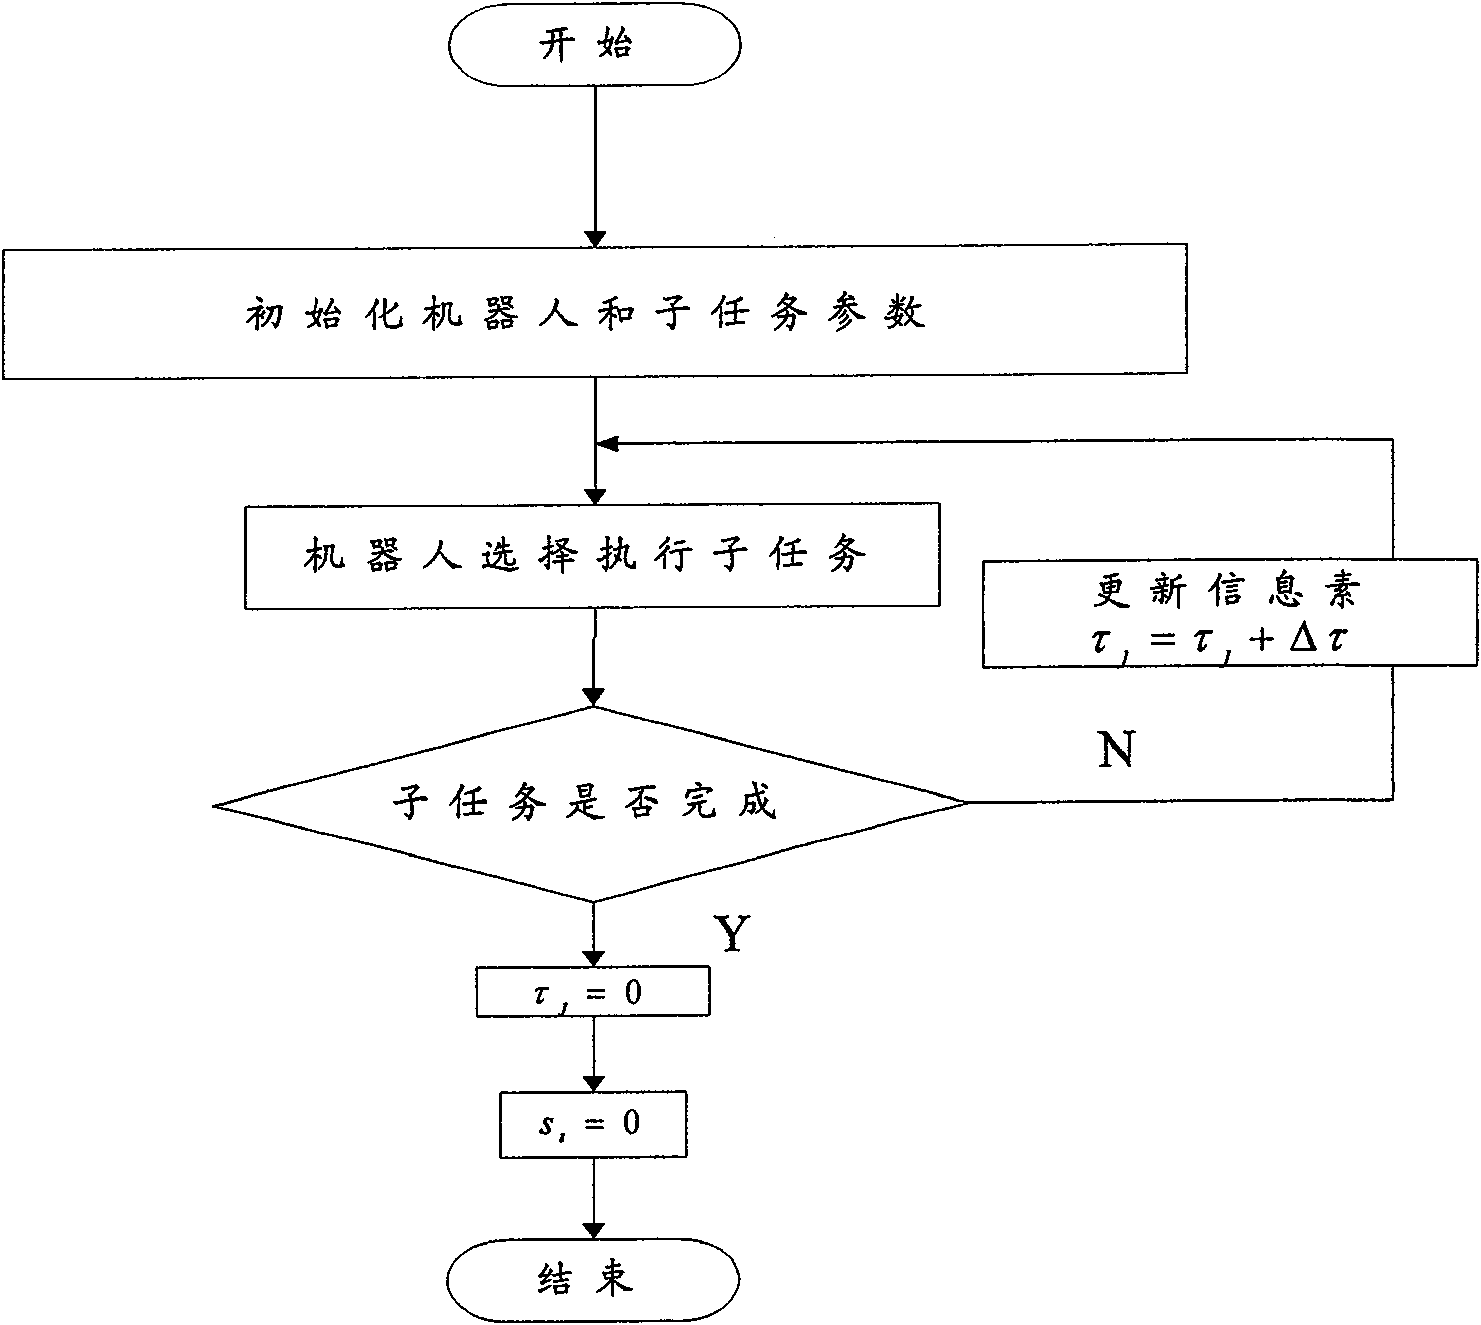 Task allocation method of heterogeneous multi-robot system